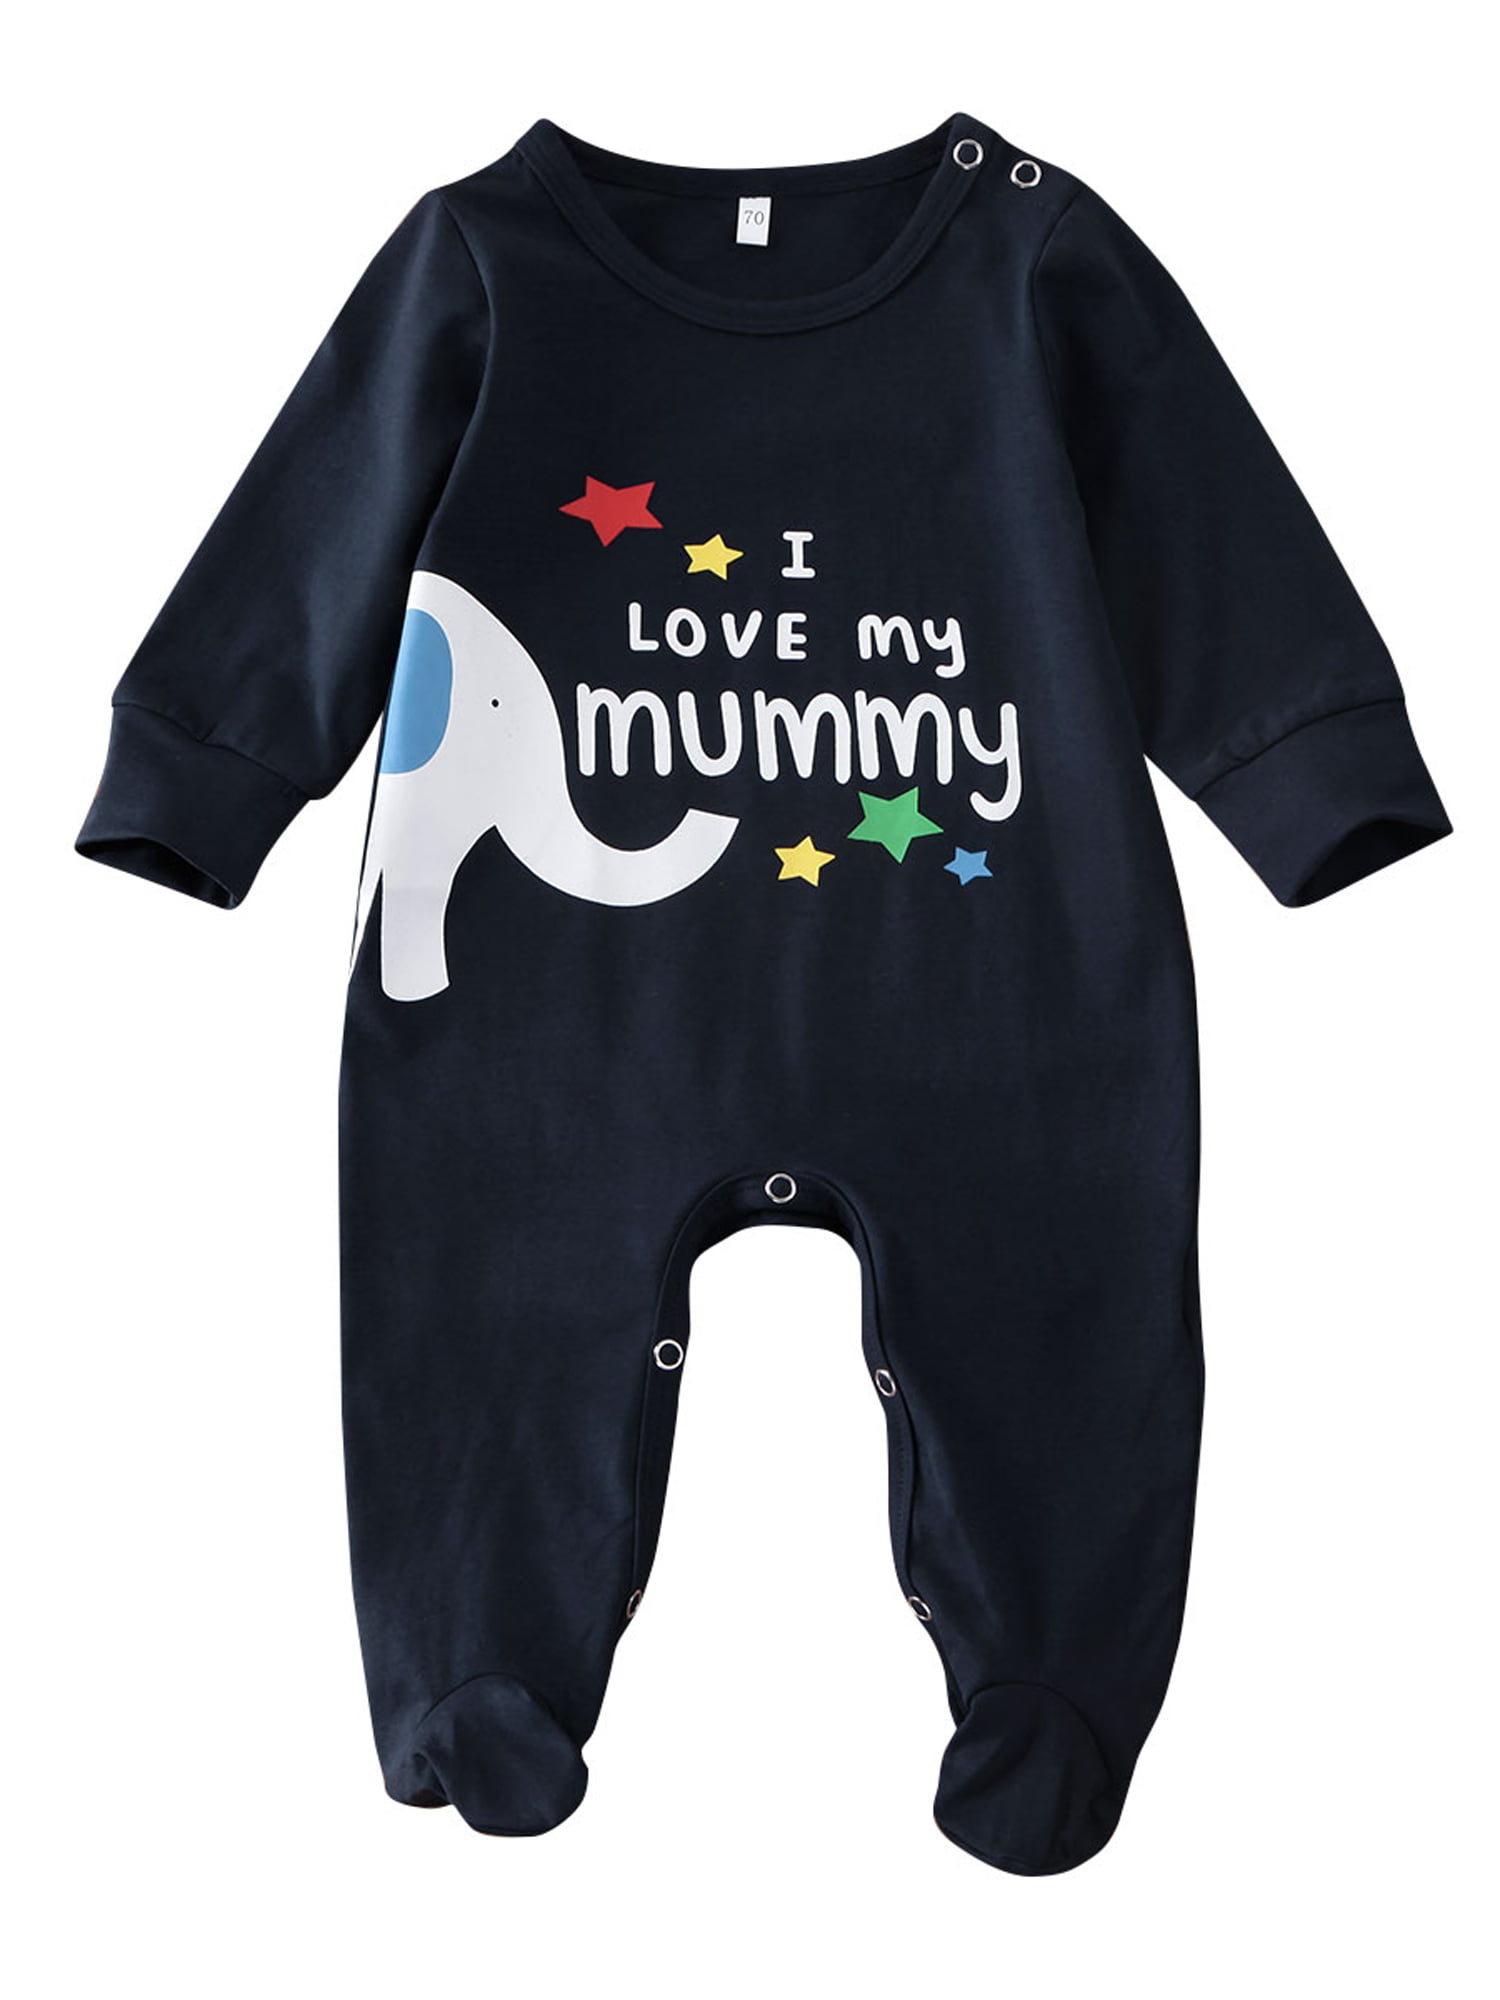 US Newborn Infant Baby Boy Girl Kid Knit Romper Jumpsuit Bodysuit Clothes Outfit 